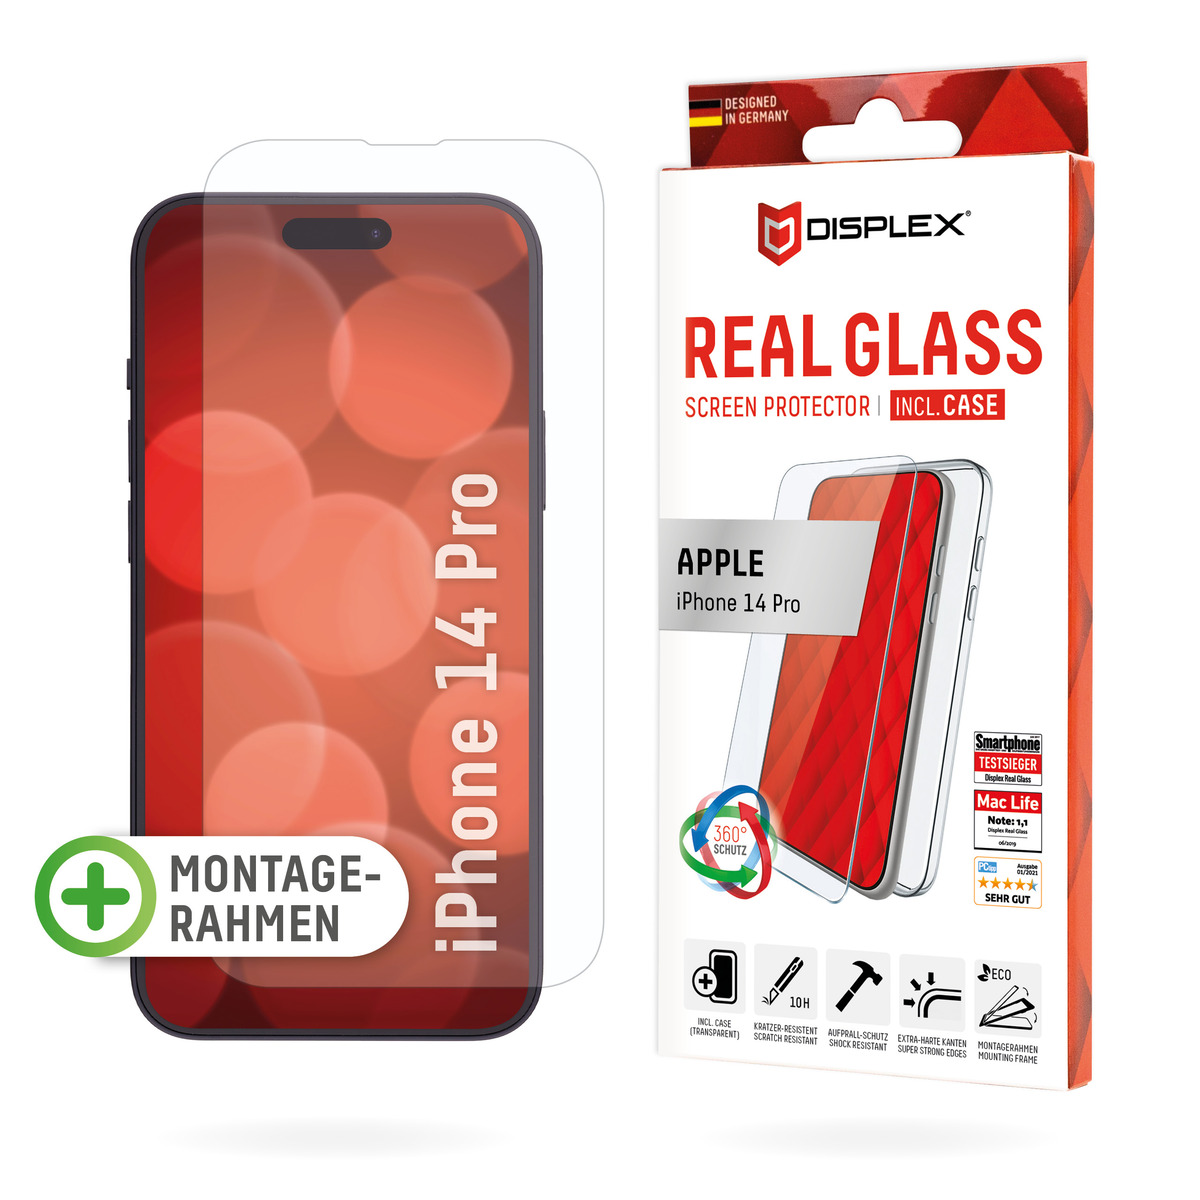 DISPLEX Real Glass + Case iPhone 14 Pro, 2022 -6,1" Pro-